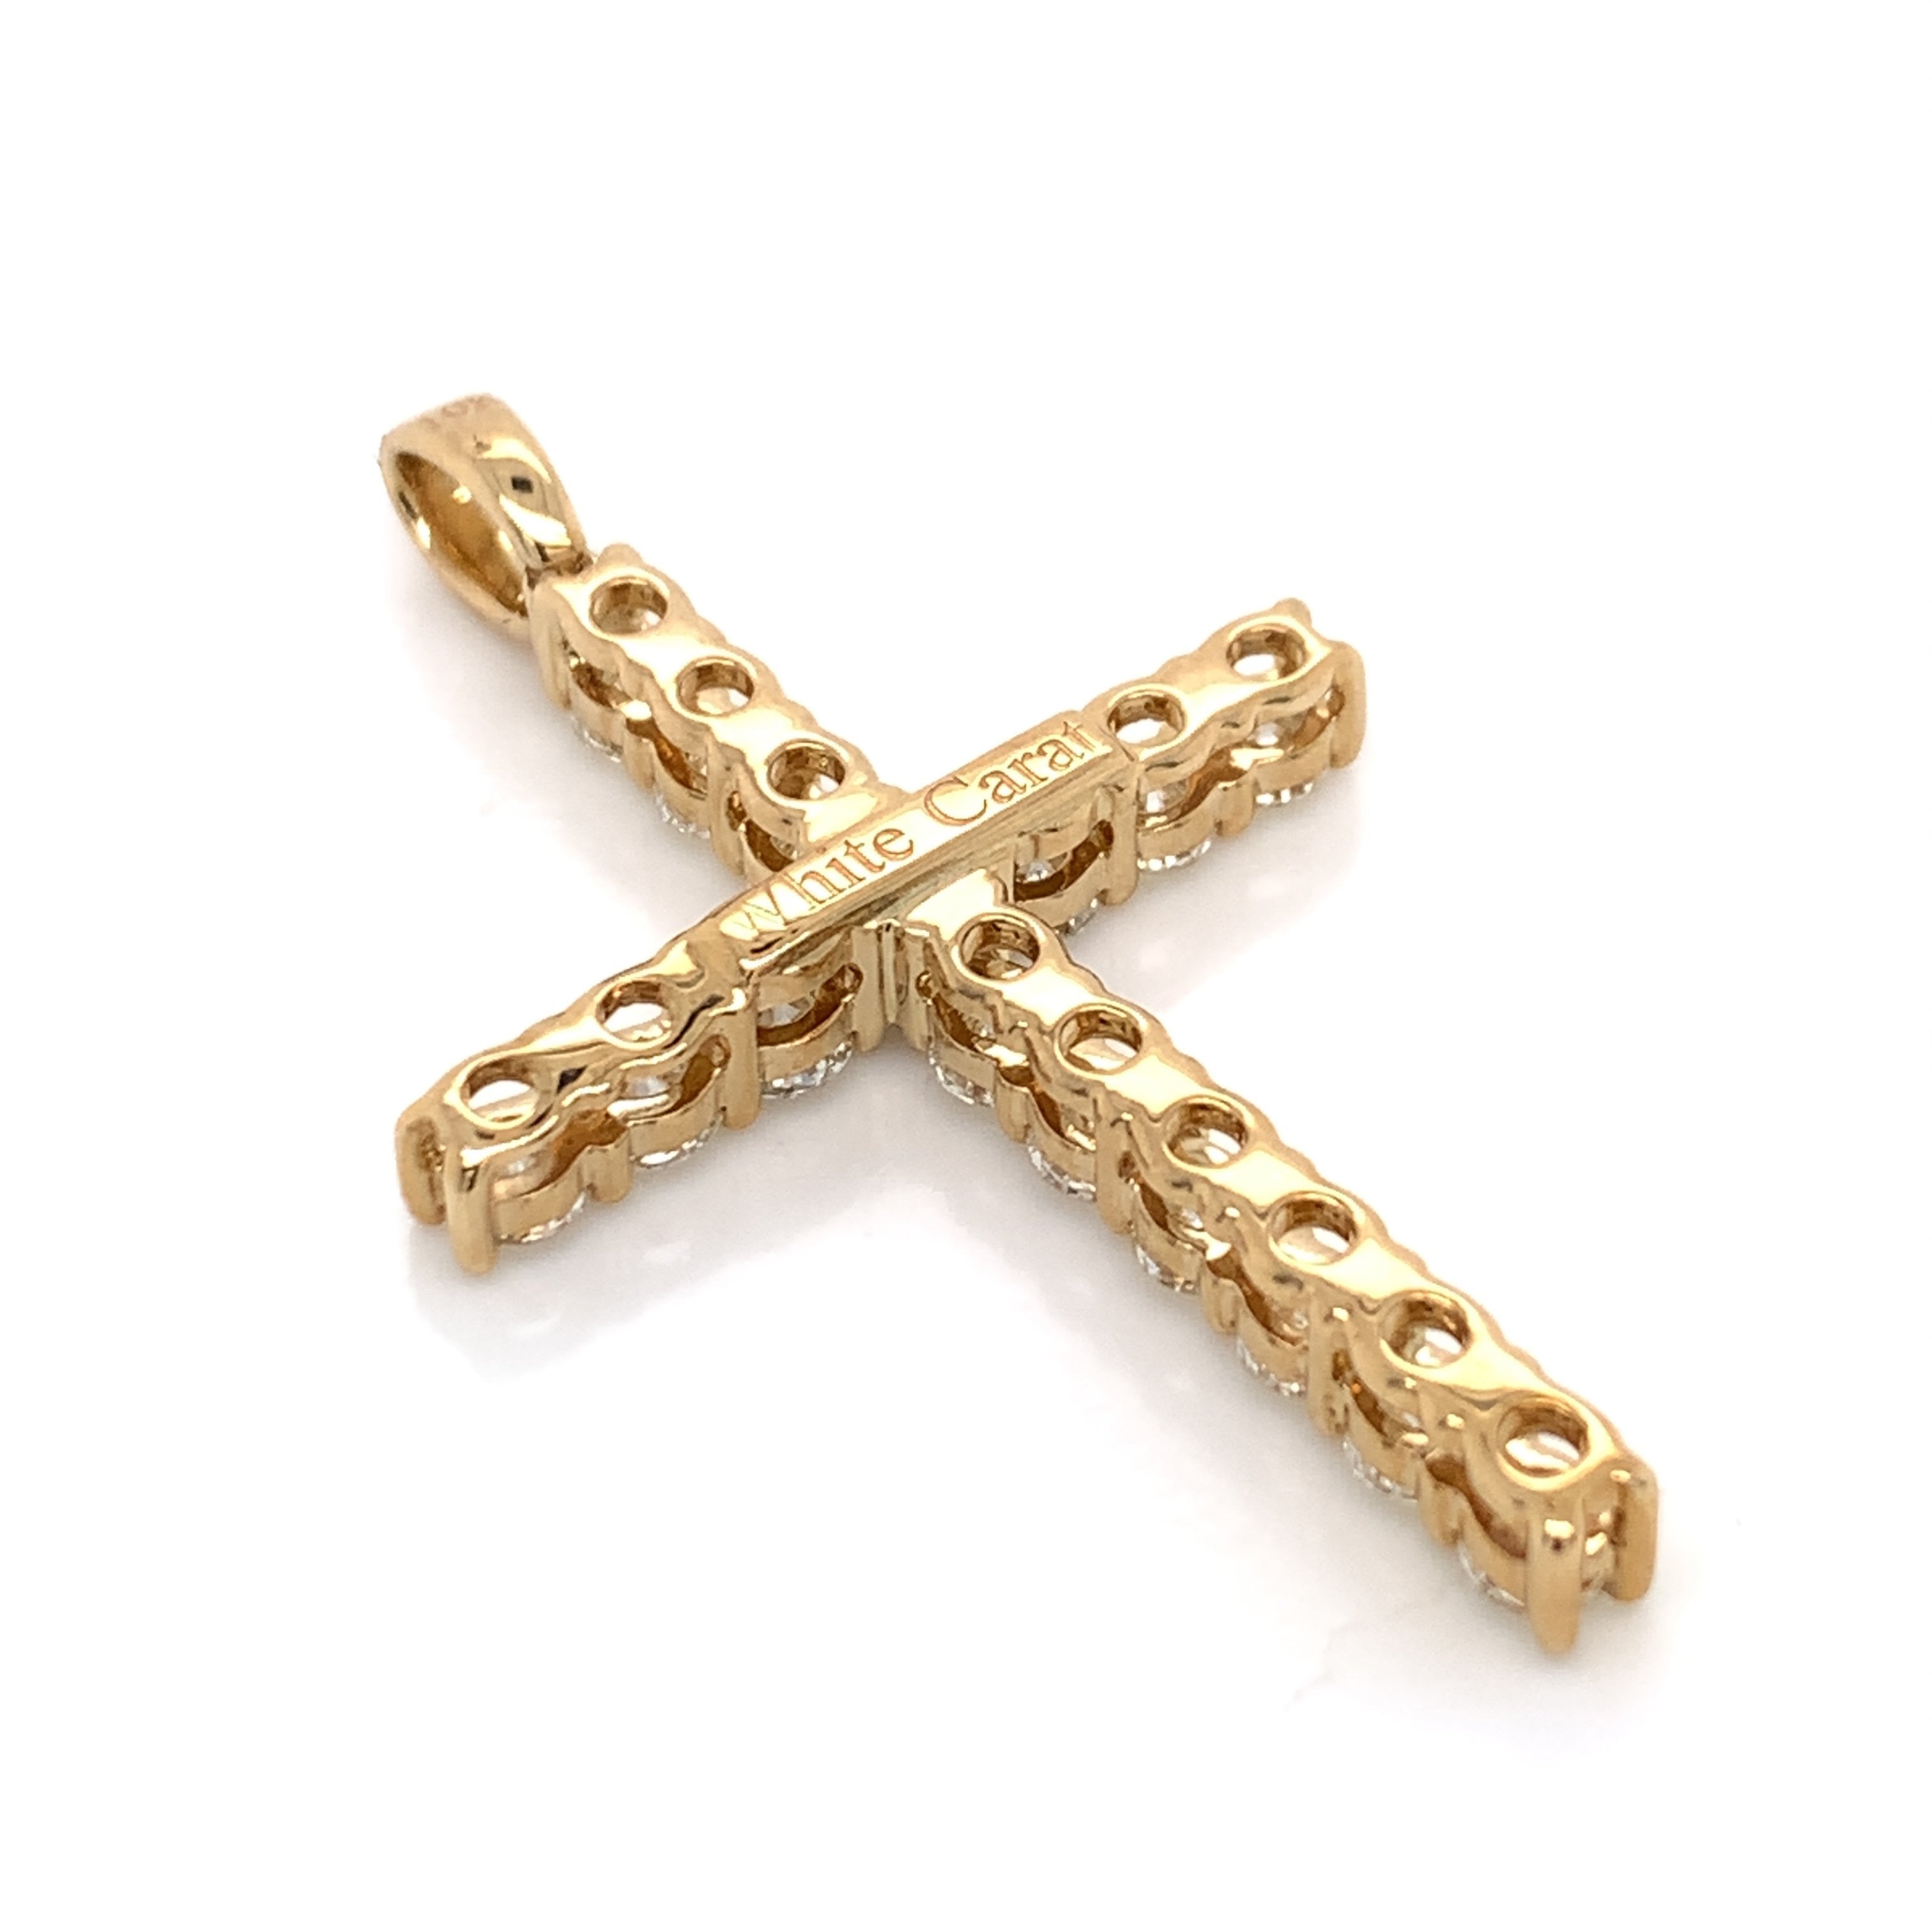 1.50 CT. Diamond Cross Pendant in 10KT Gold - White Carat Diamonds 